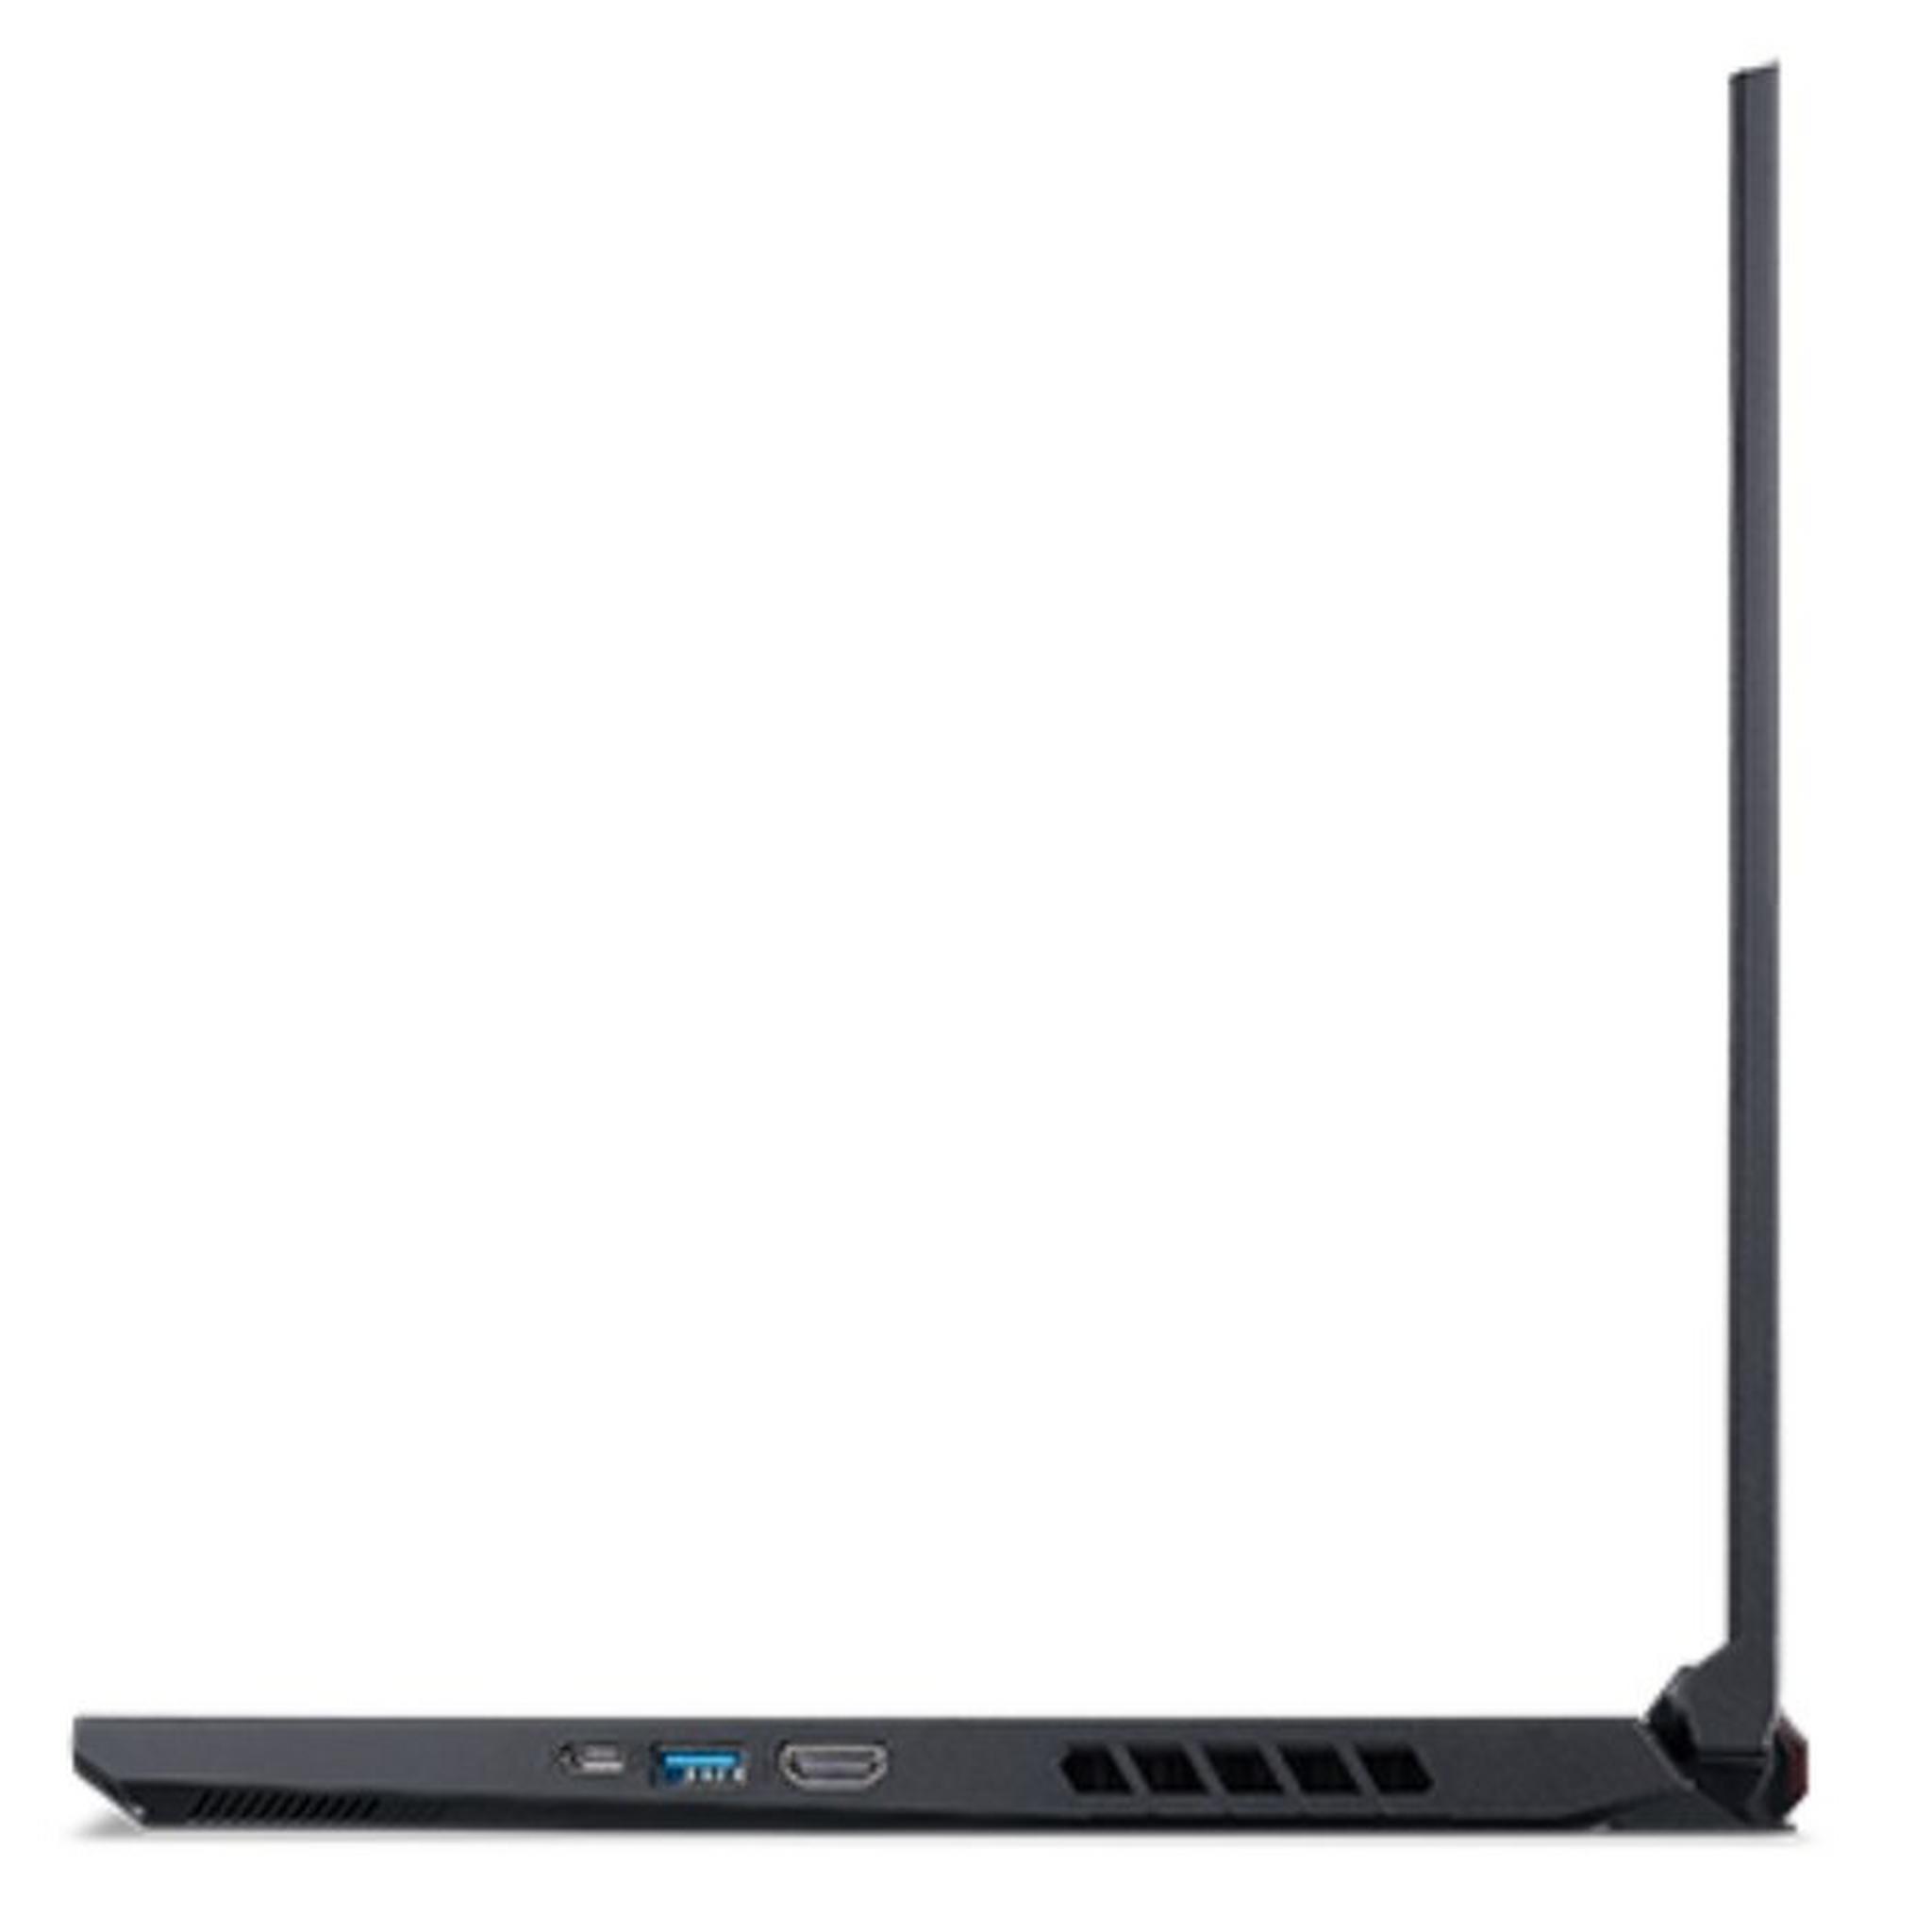 Acer Nitro 5 Intel Core i5 Gen 11th, 8GB RAM, Nvidia GTX 1650, 1TB SSD, 15.6-inch Gaming Laptop